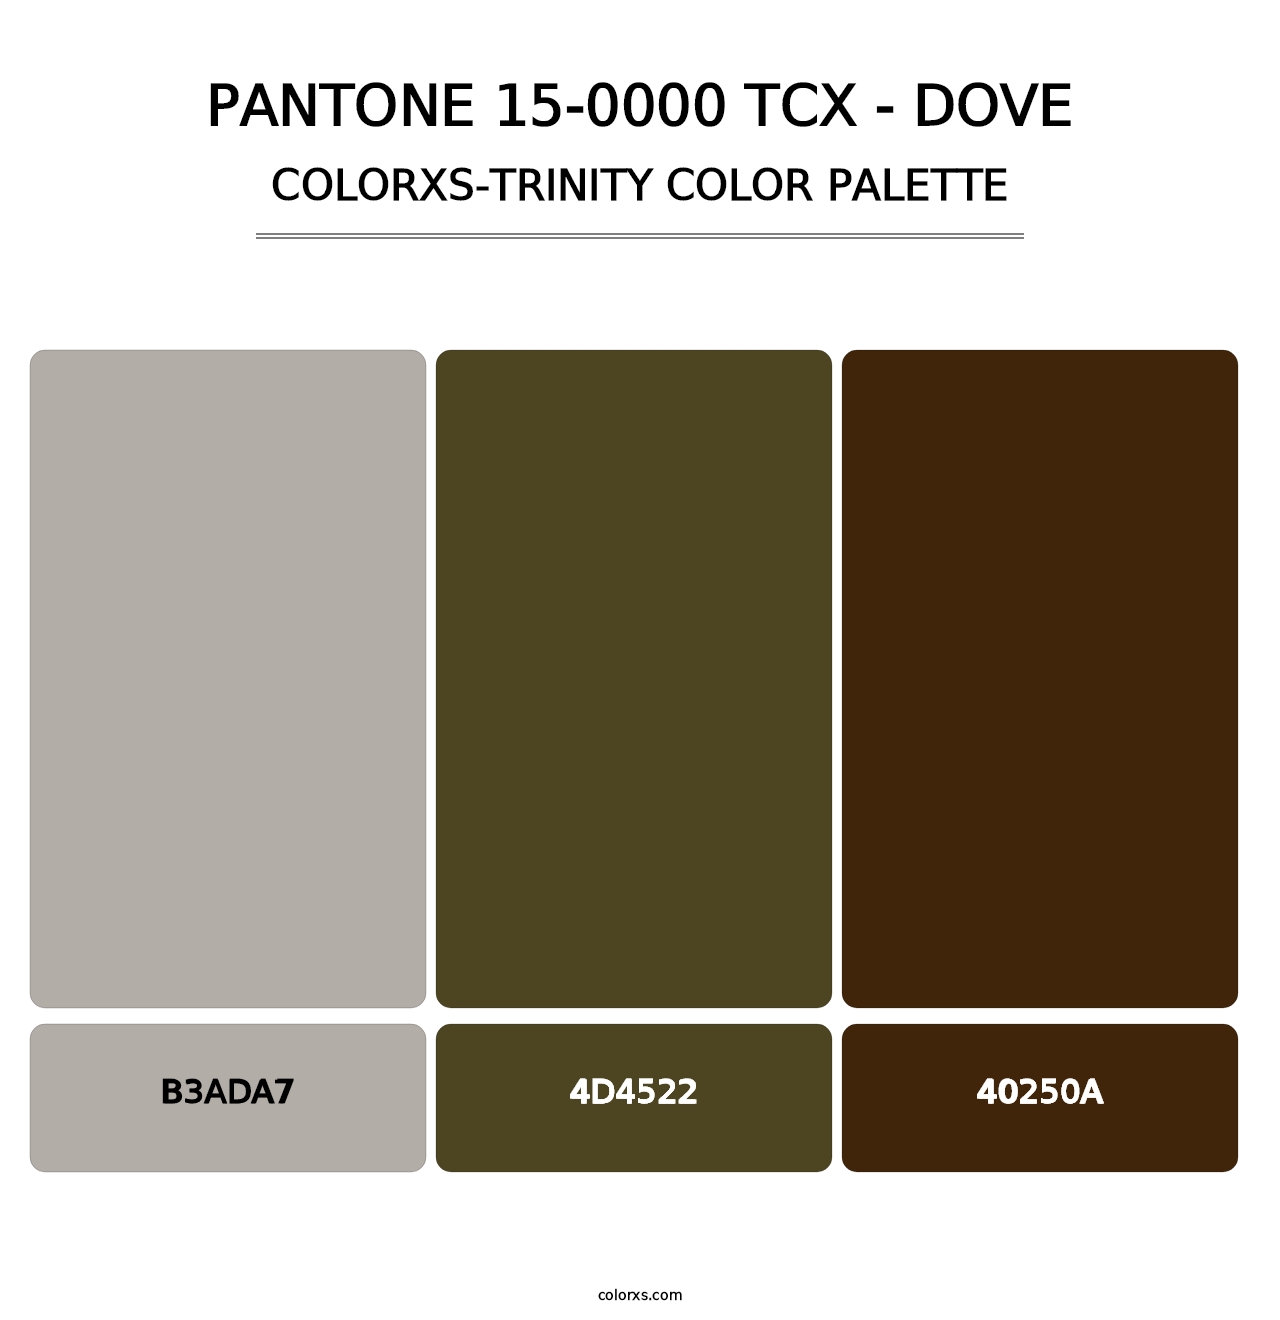 PANTONE 15-0000 TCX - Dove - Colorxs Trinity Palette